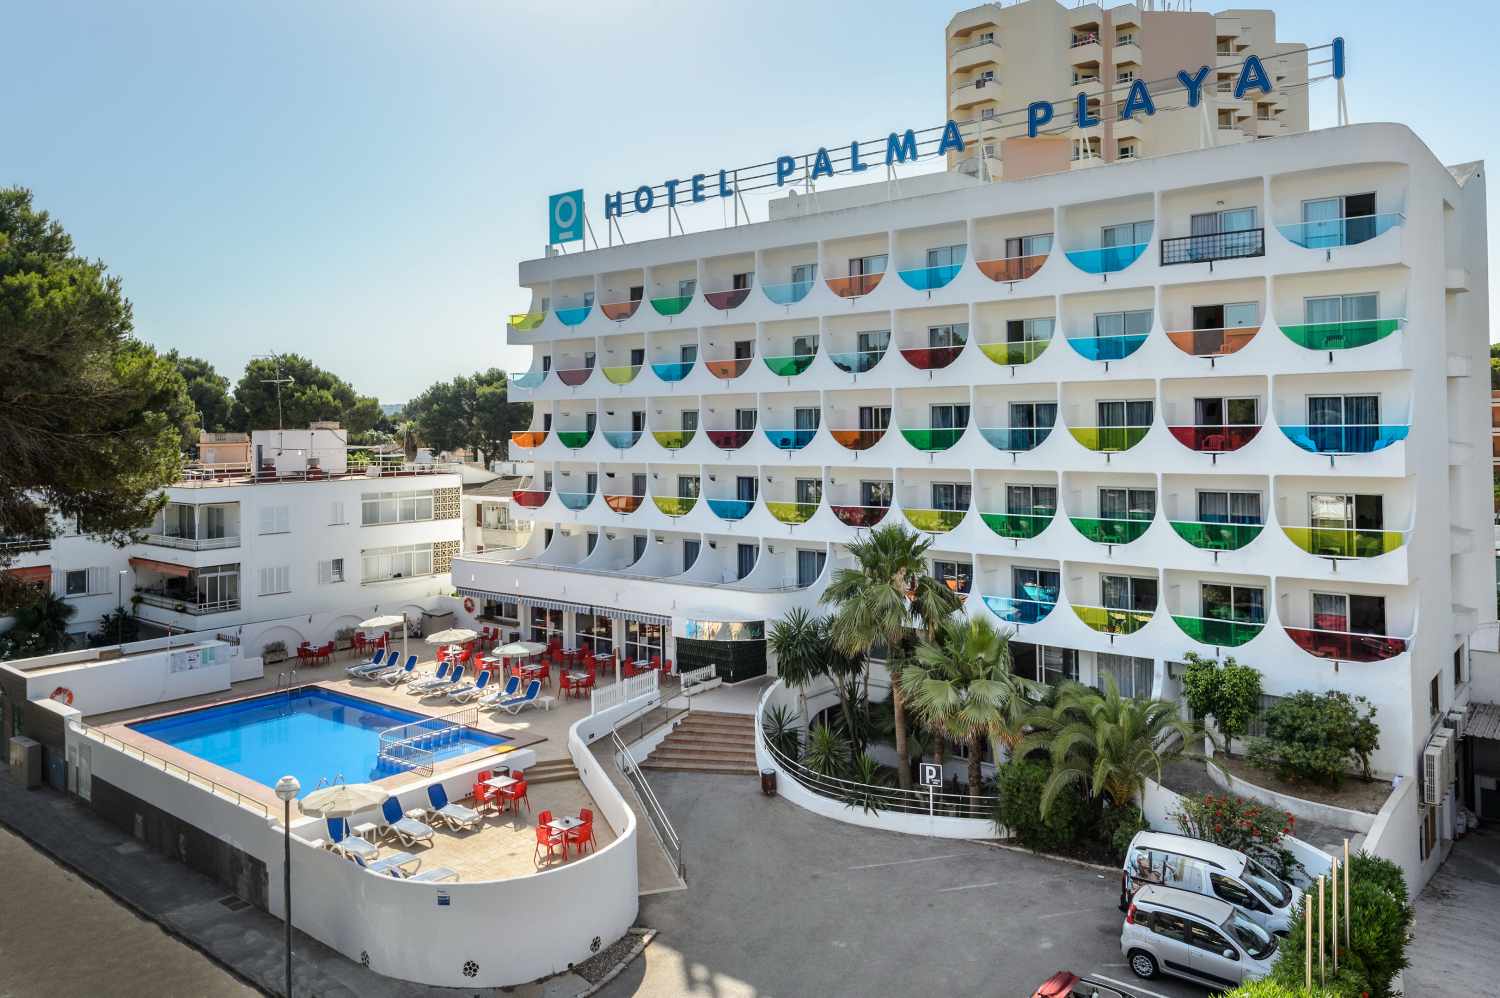 Hotel Vibra Palma Cactus, Playa de Palma, Mallorca, Spanje